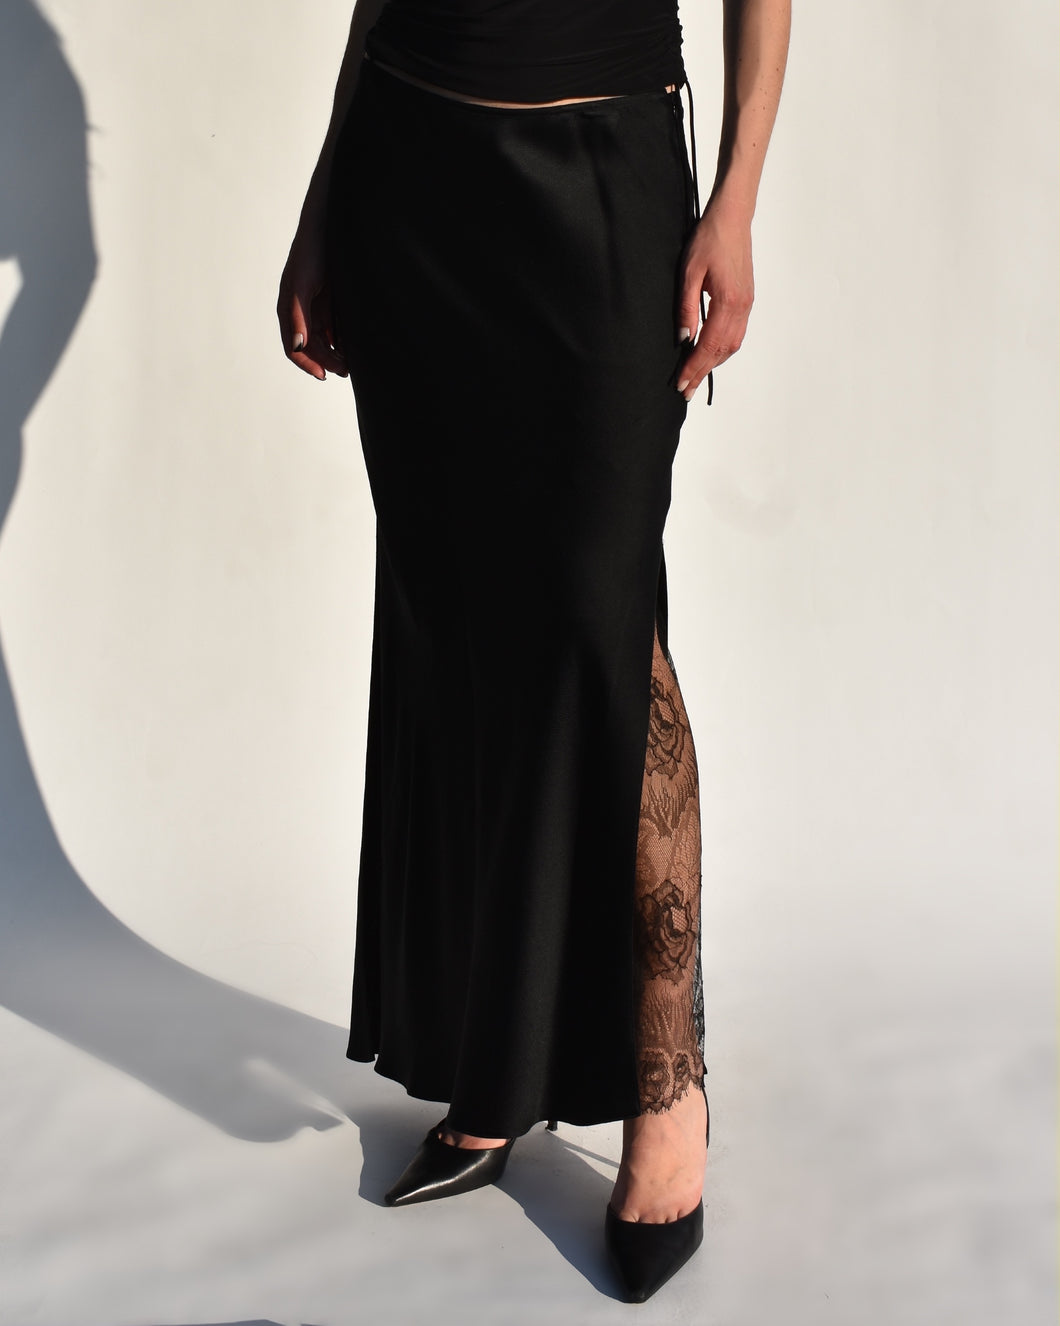 Christian Dior Satin Lace Maxi Skirt